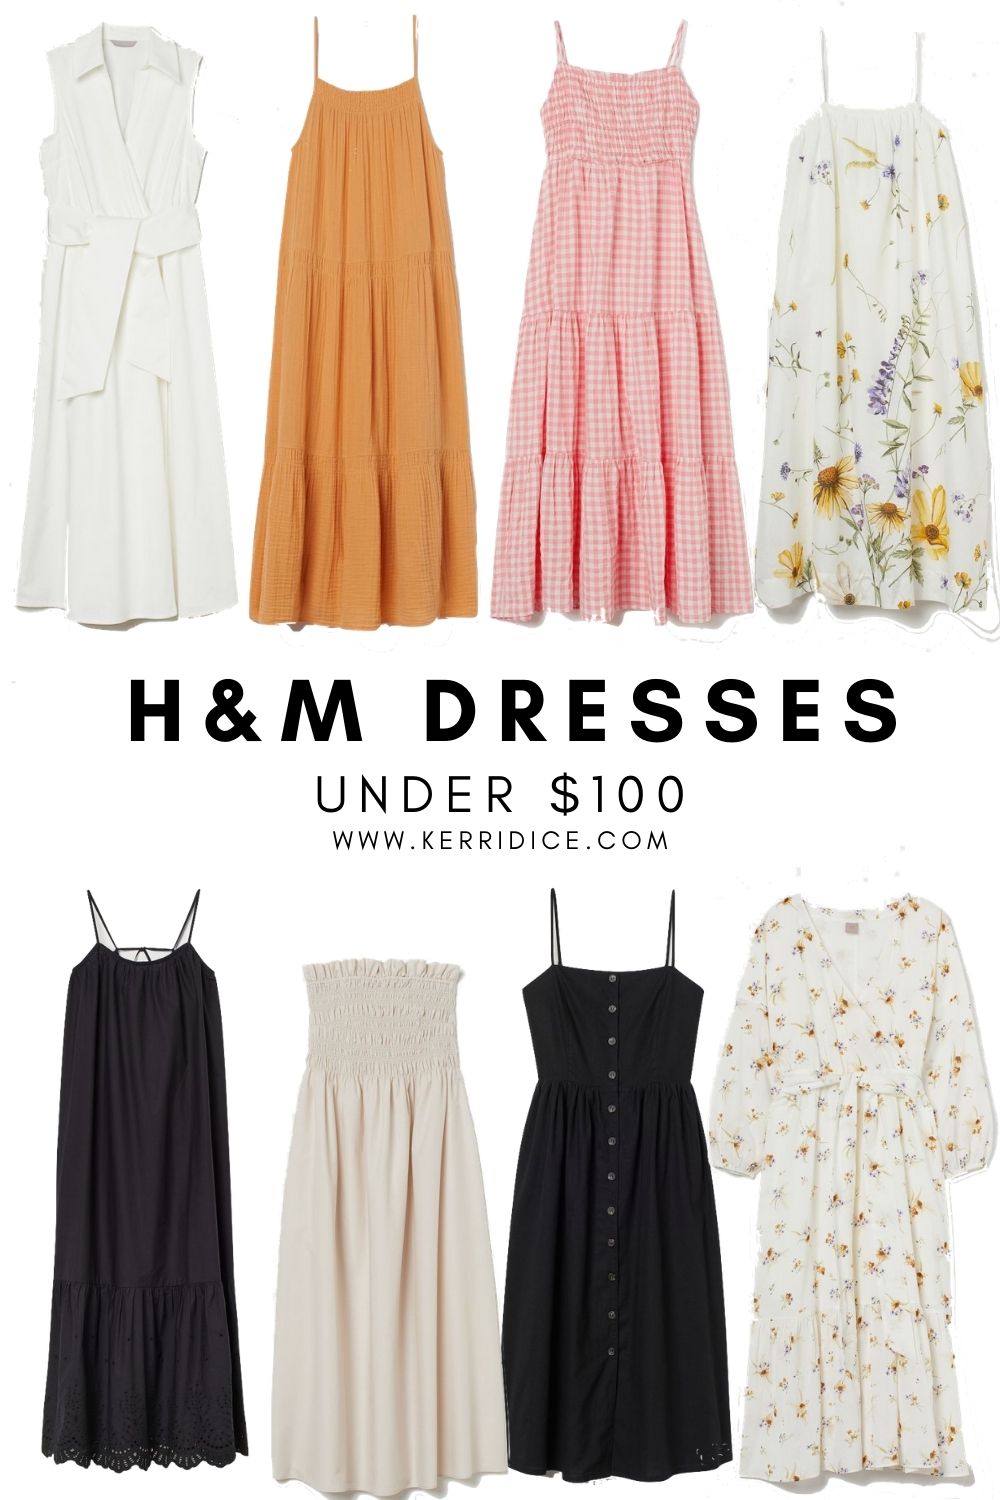 H&M DRESSES UNDER $100